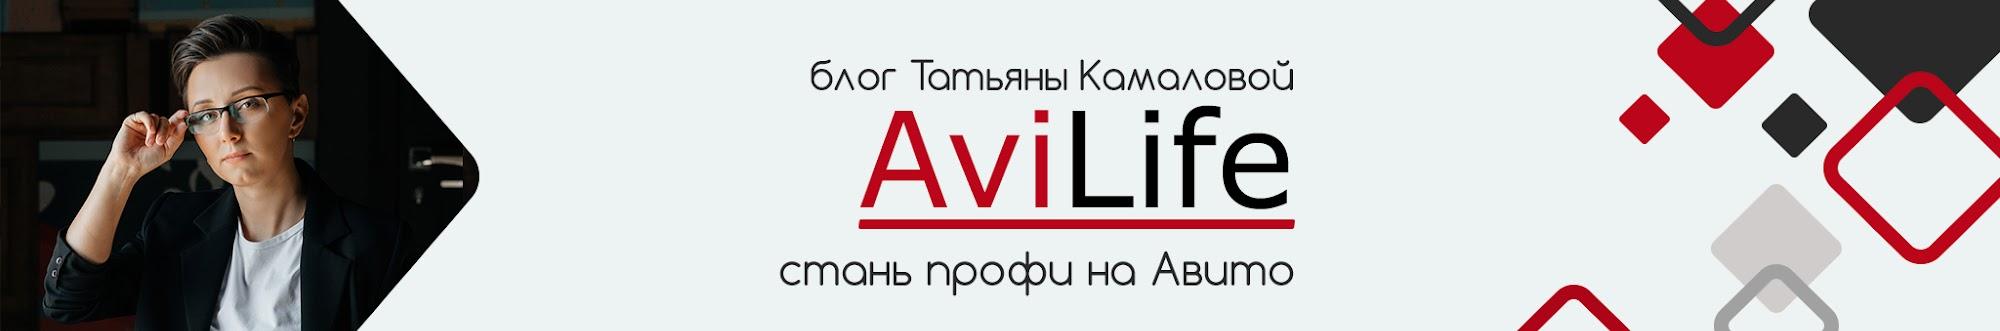 AviLife - стань профи на Авито